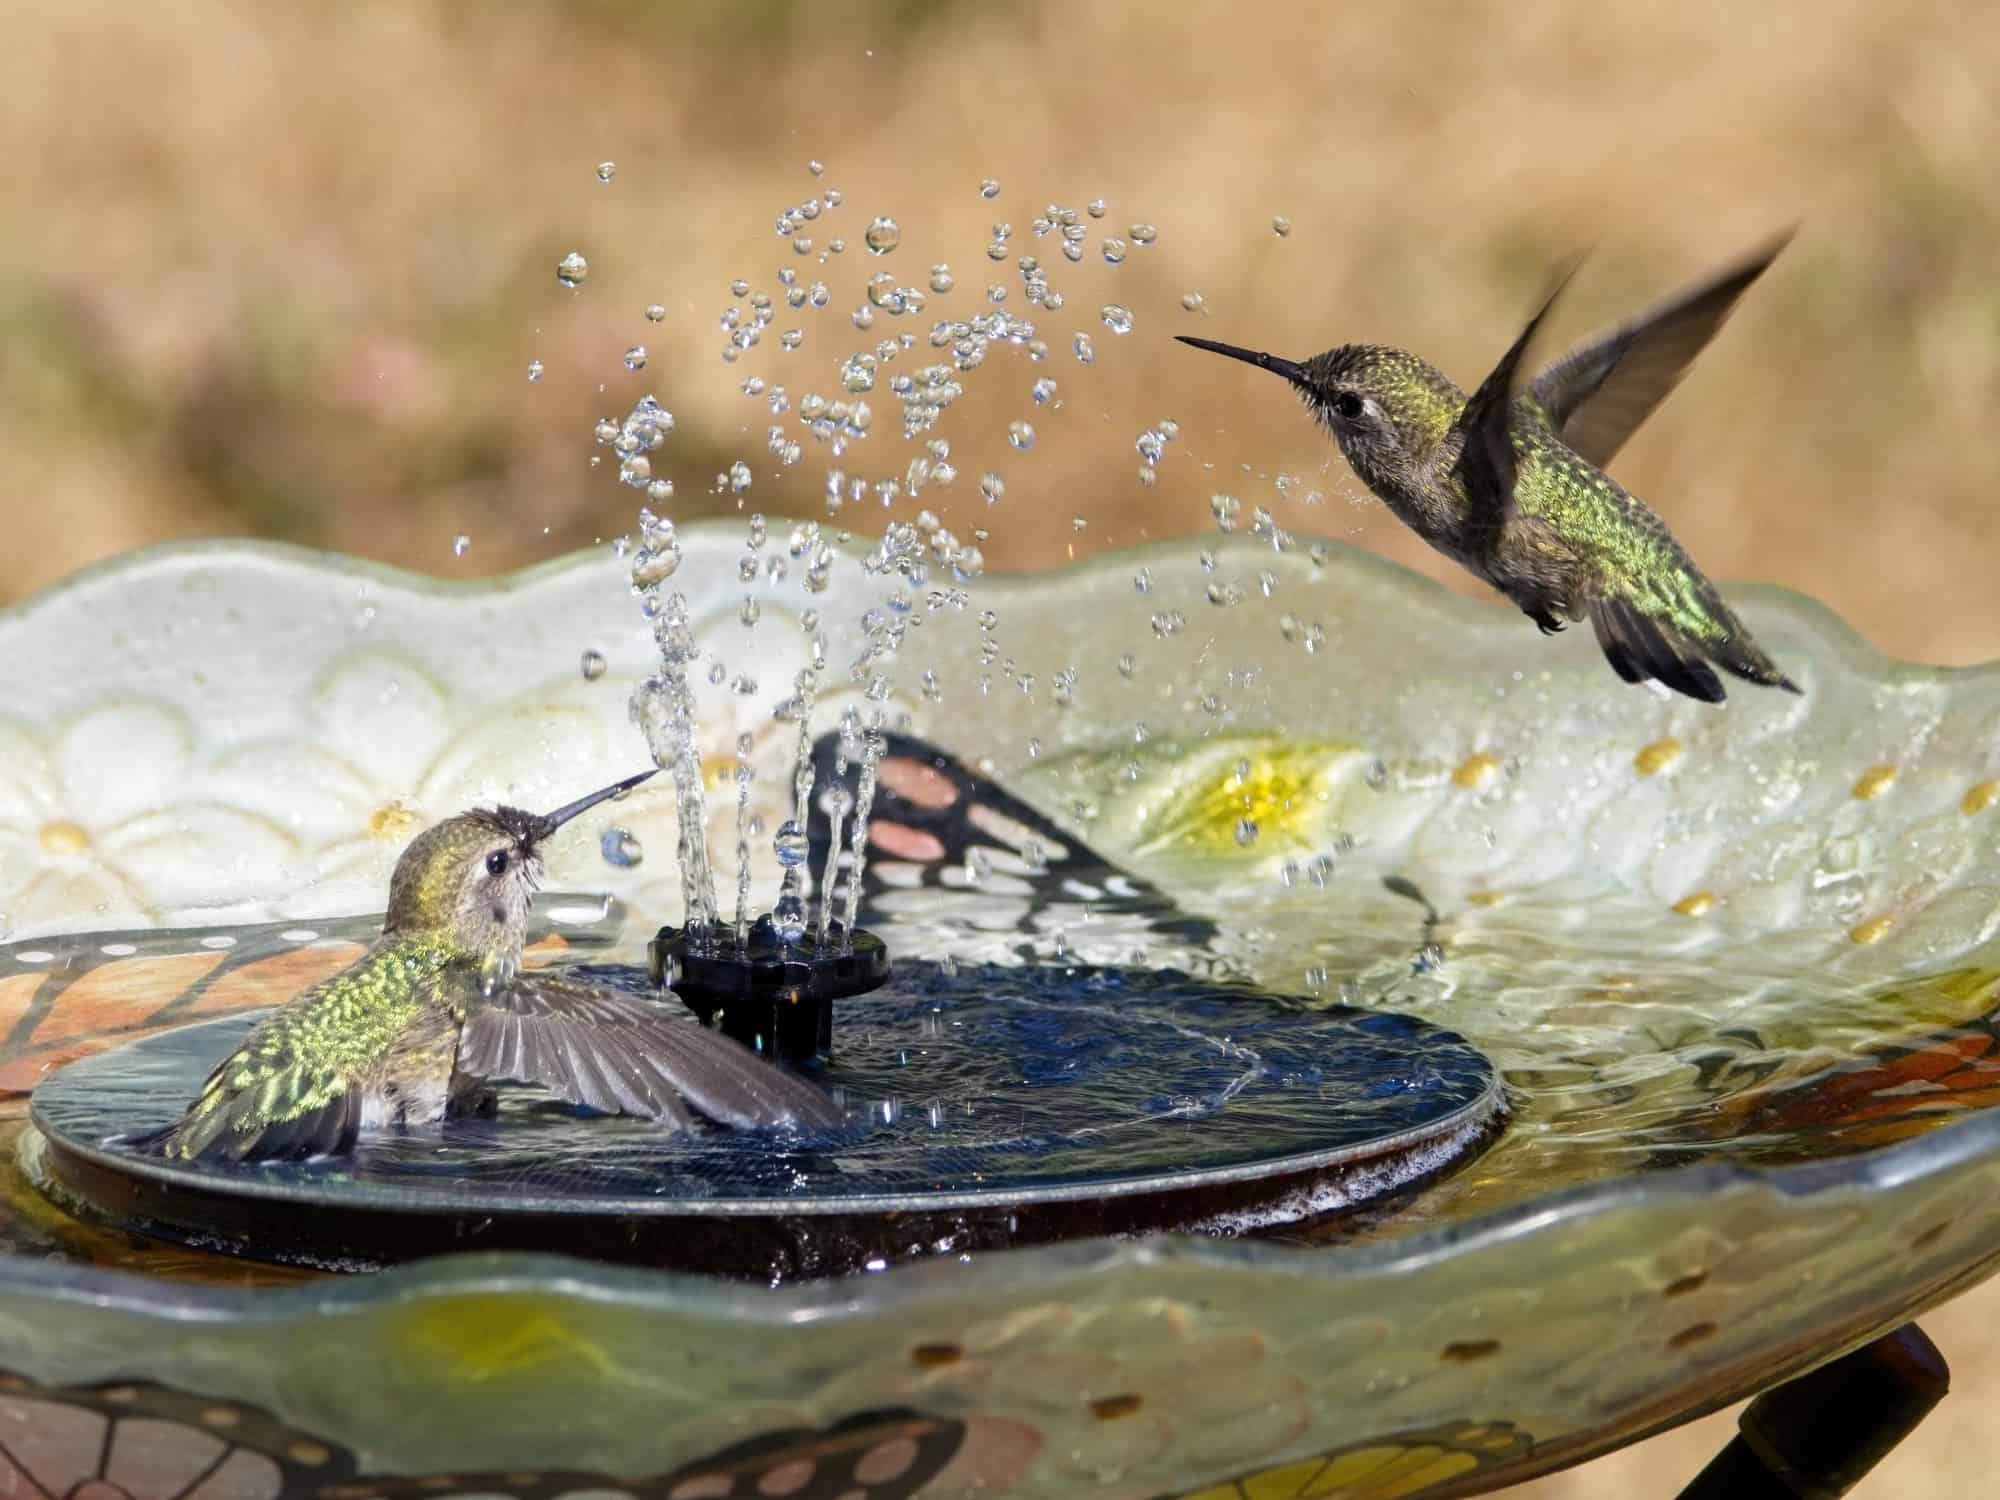 Two Anna's hummingbirds play in the birdbath